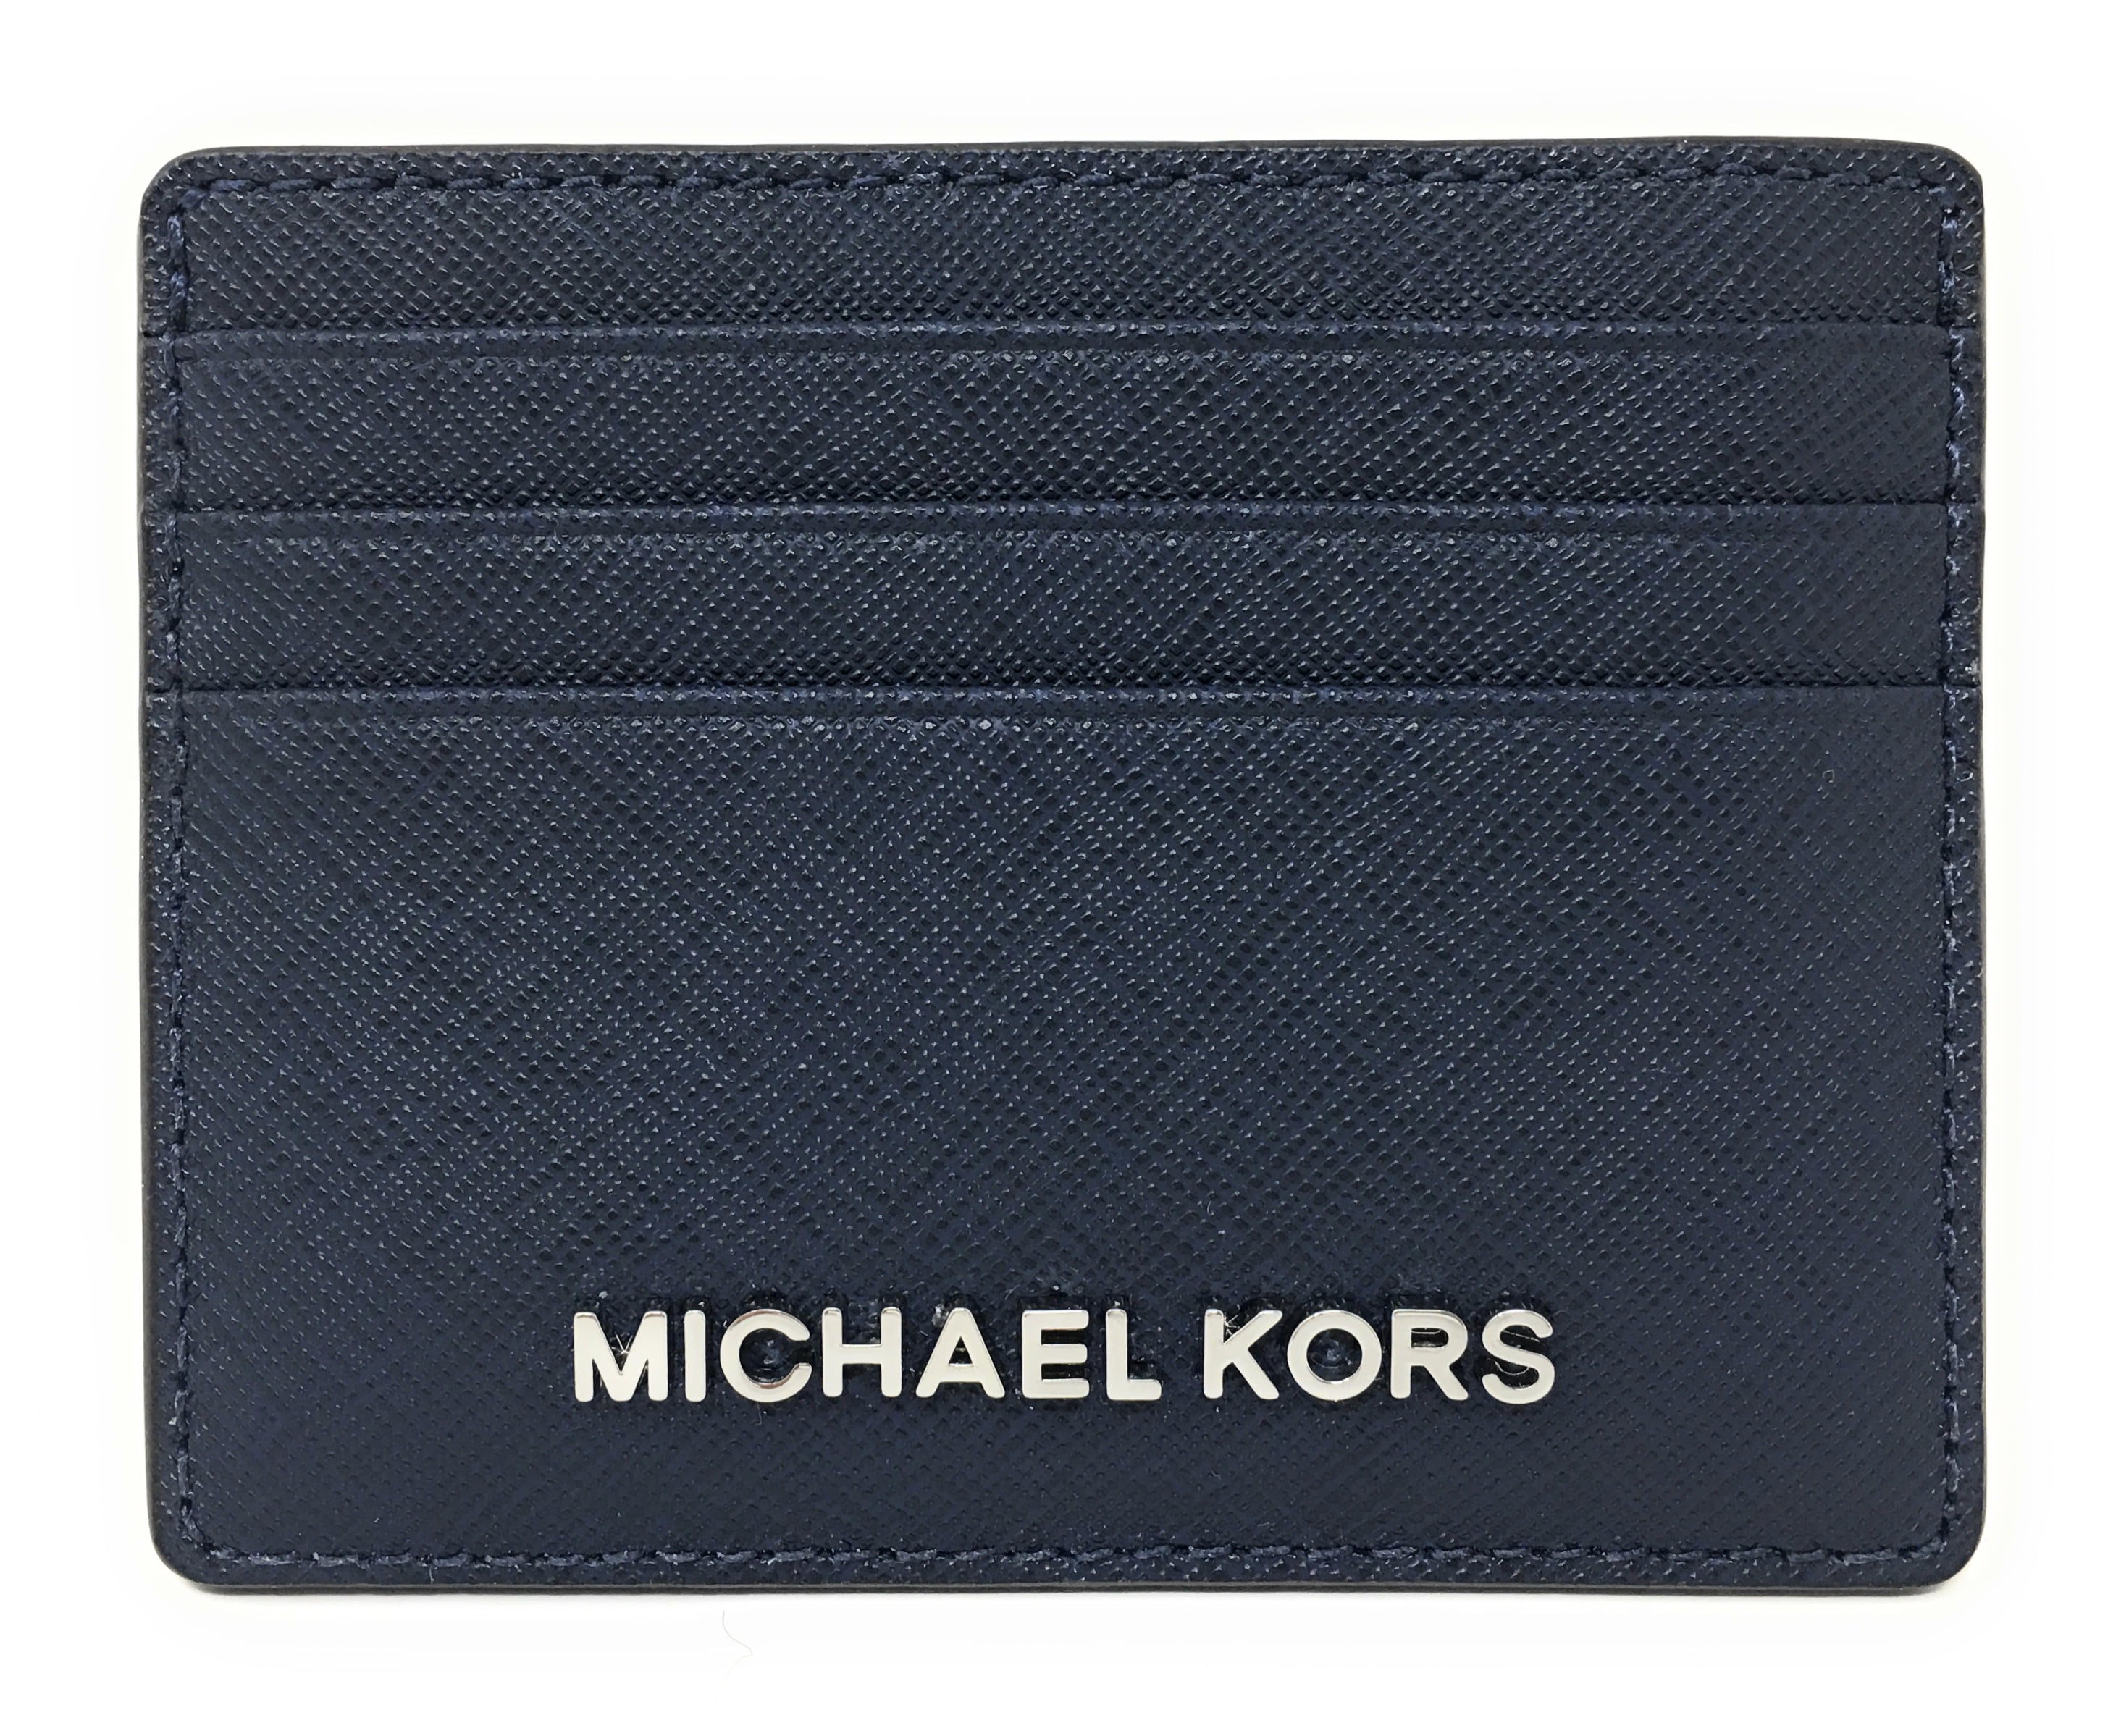 Michael Kors - Michael Kors Jet Set Travel Large Saffiano Leather Card ...